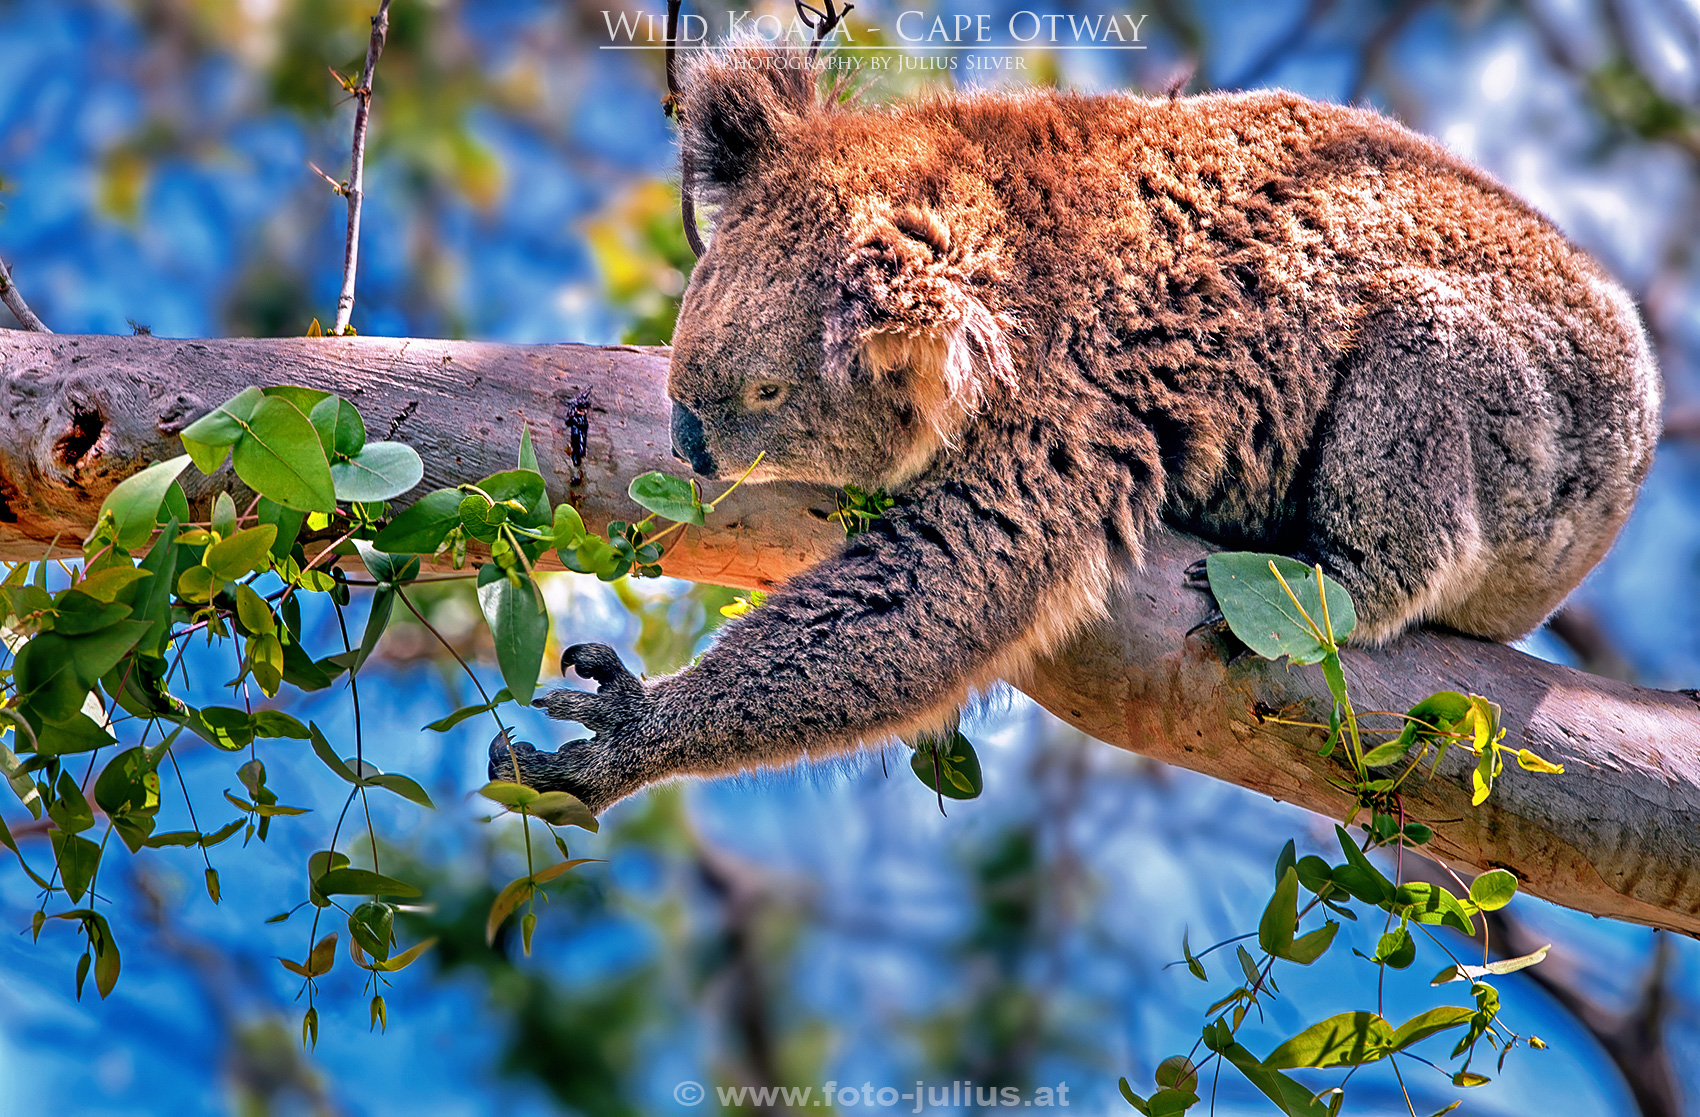 Australia_097a_Wild_Koala_Cape_Otway.jpg, 1,1MB